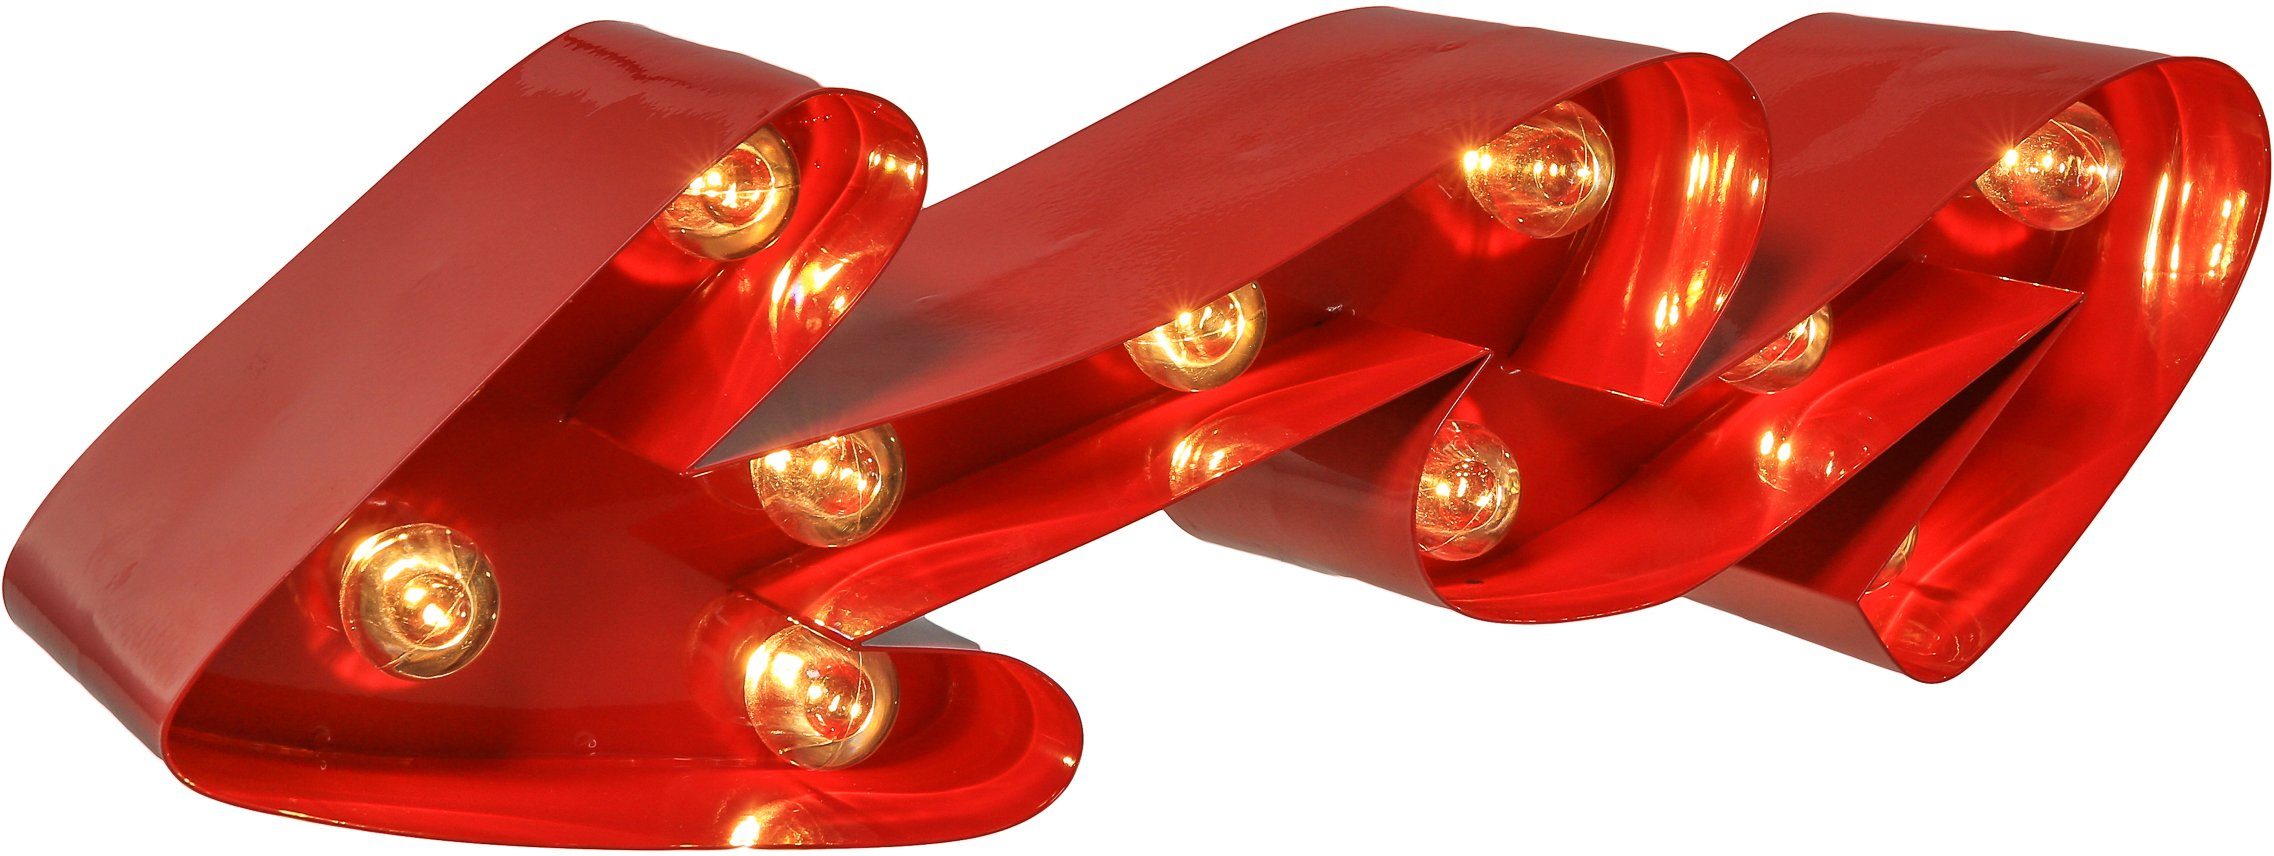 MARQUEE LIGHTS 38x12cm LED fest festverbauten LEDs 10 - Warmweiß, Dekolicht Arrow, Wandlampe, LED Curved integriert, Tischlampe mit Curved Arrow